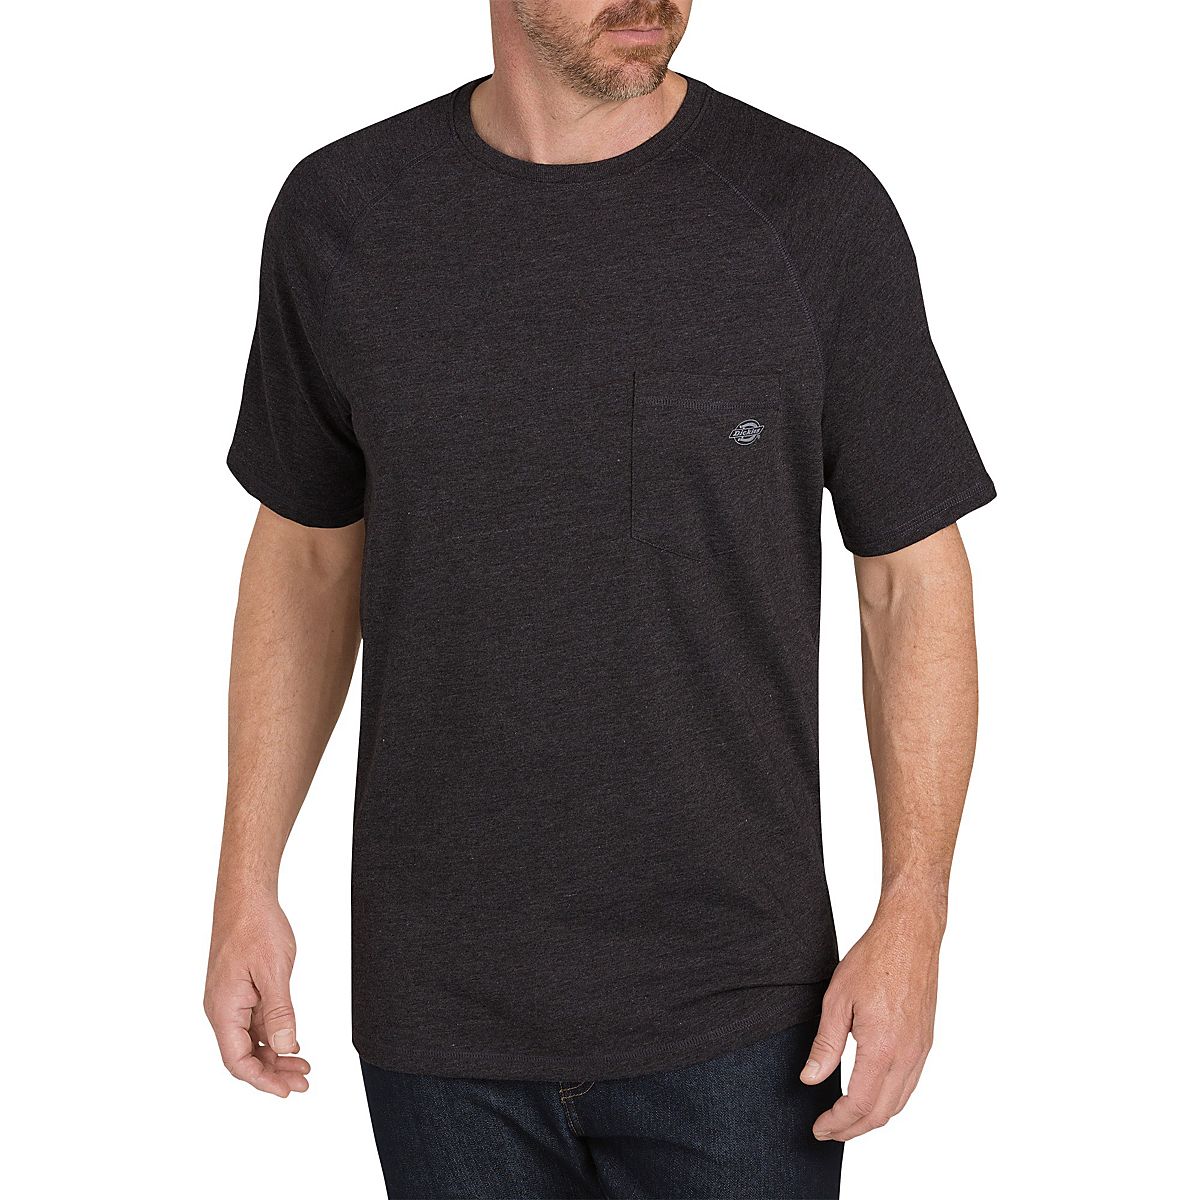 Dickies ss600 temp-iq performance cooling t-shirt - Knit Black Heather, S